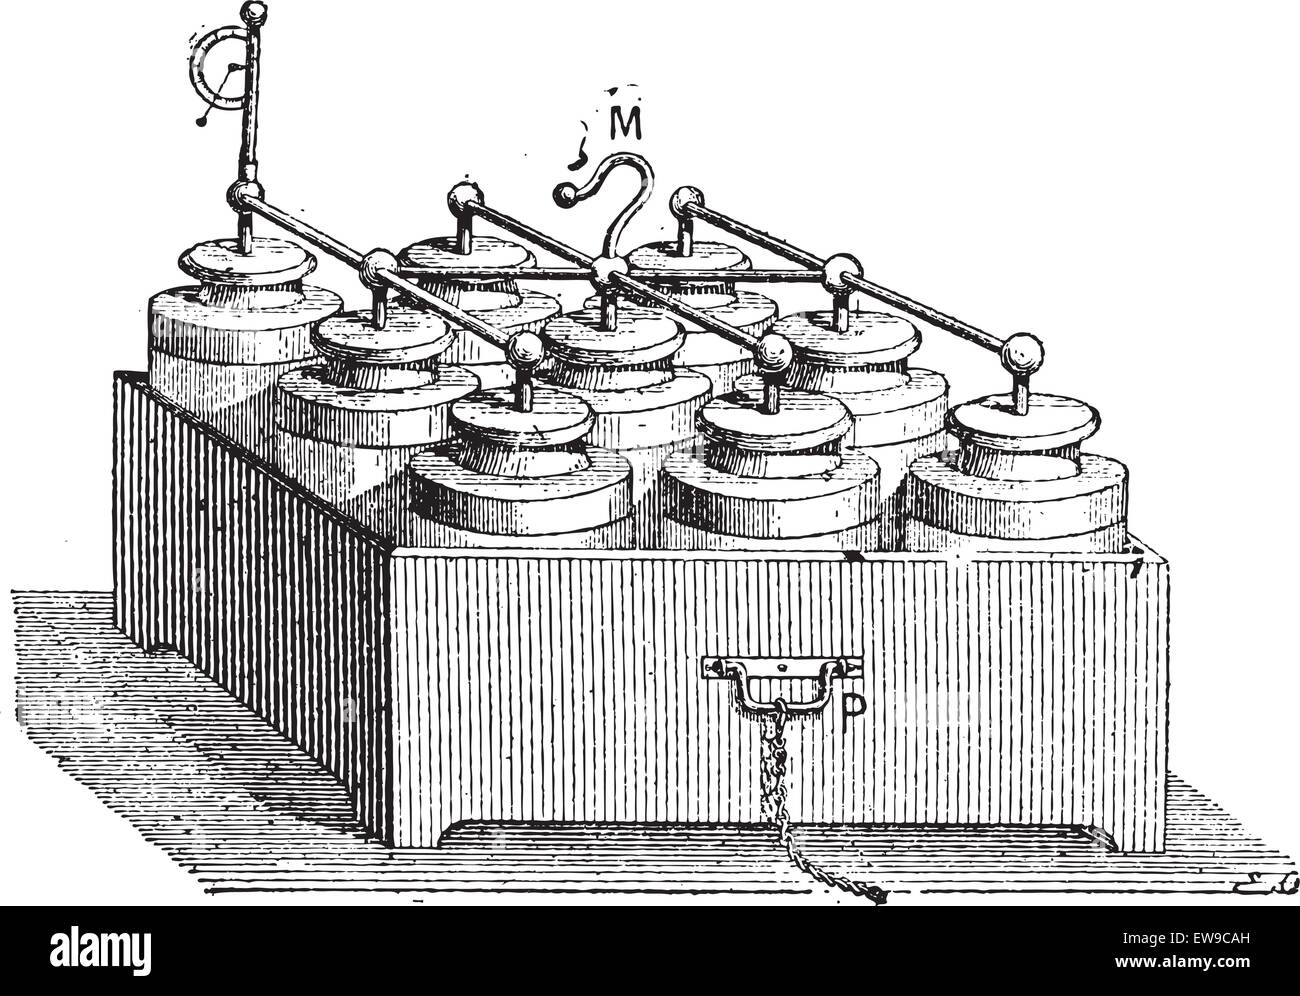 https://c8.alamy.com/comp/EW9CAH/electric-battery-made-up-of-leyden-jars-vintage-engraved-illustration-EW9CAH.jpg